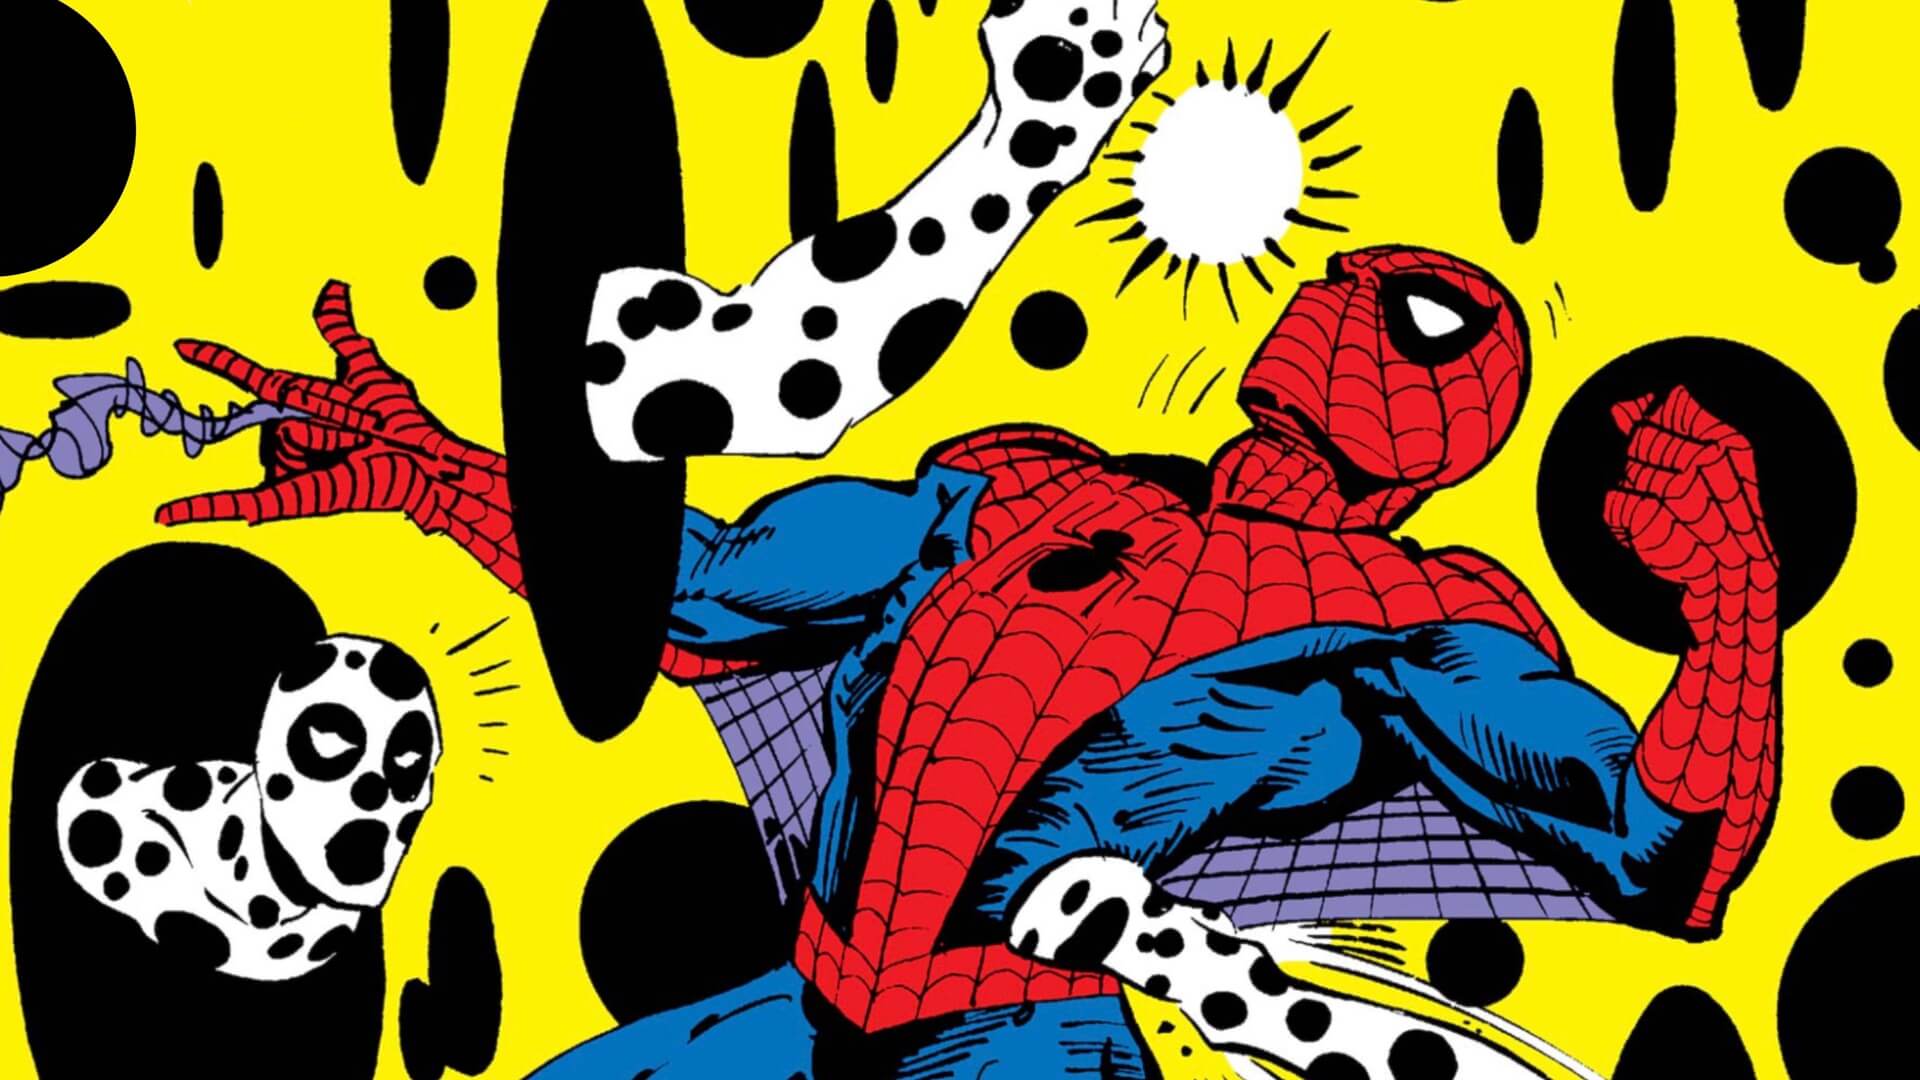 Spider-Man: Across the Spider-Verse rumored villain 'The Spot' 